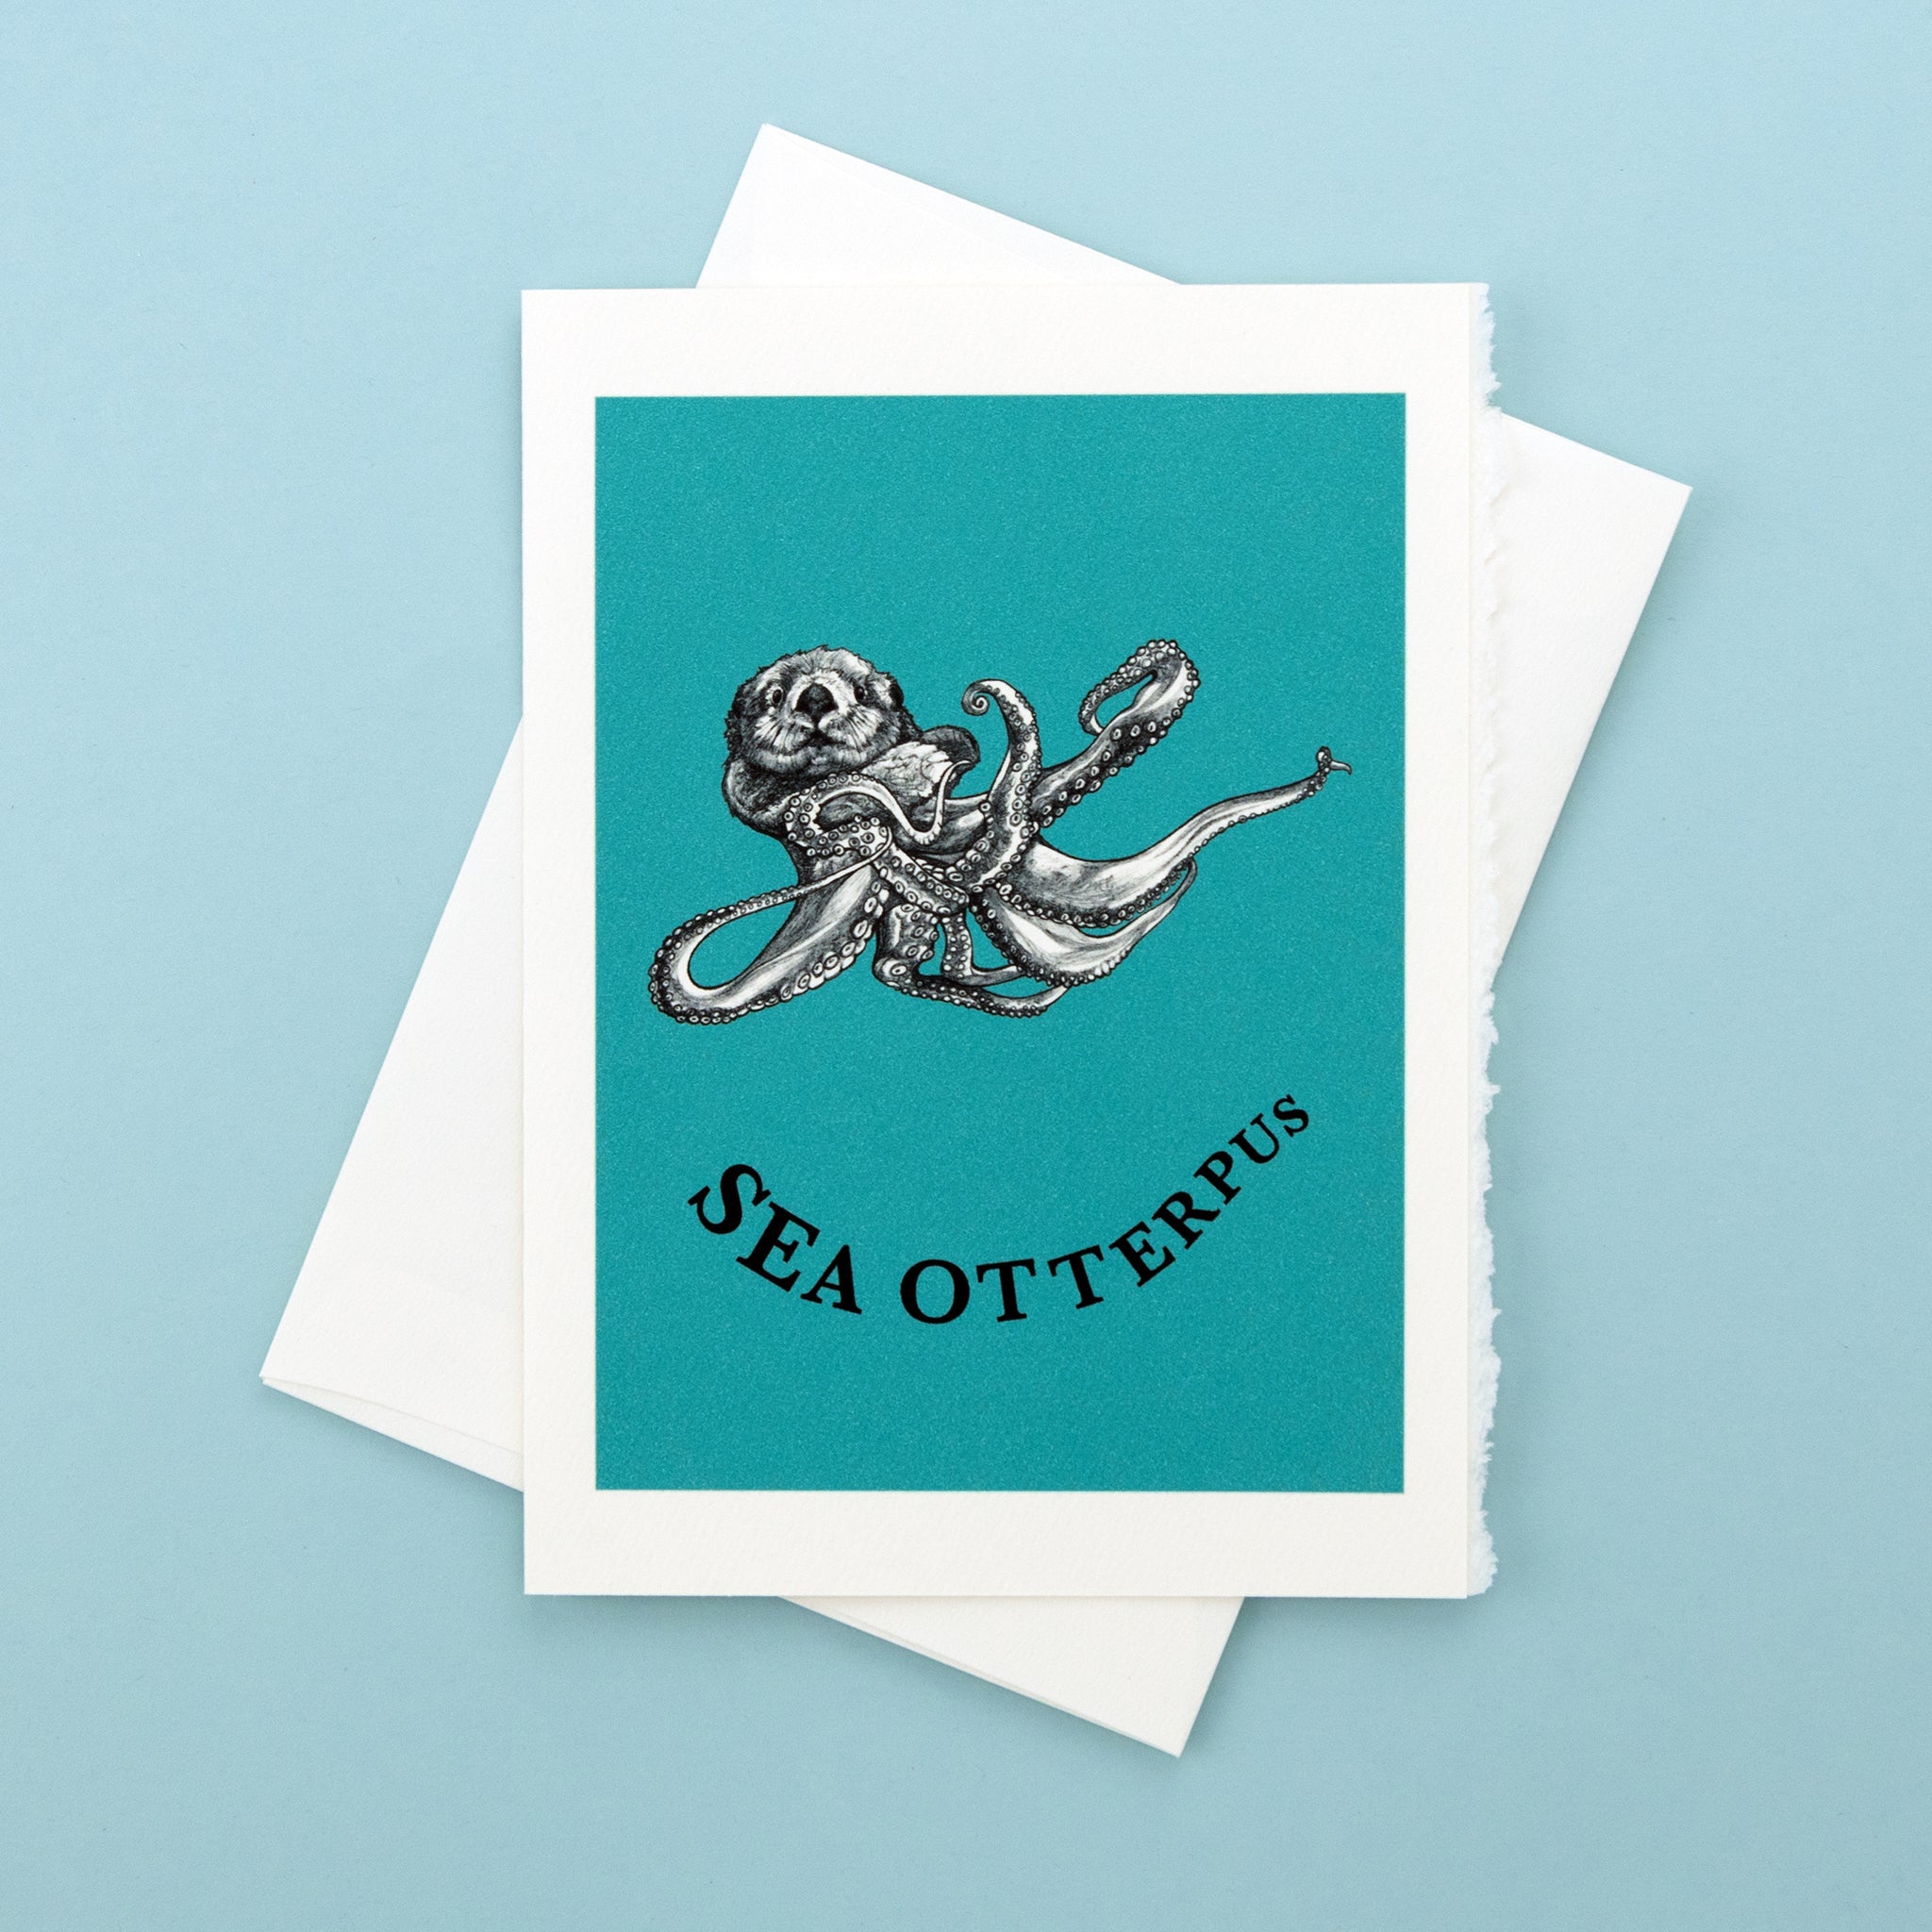 Sea Otterpus 5x7" Greeting Card